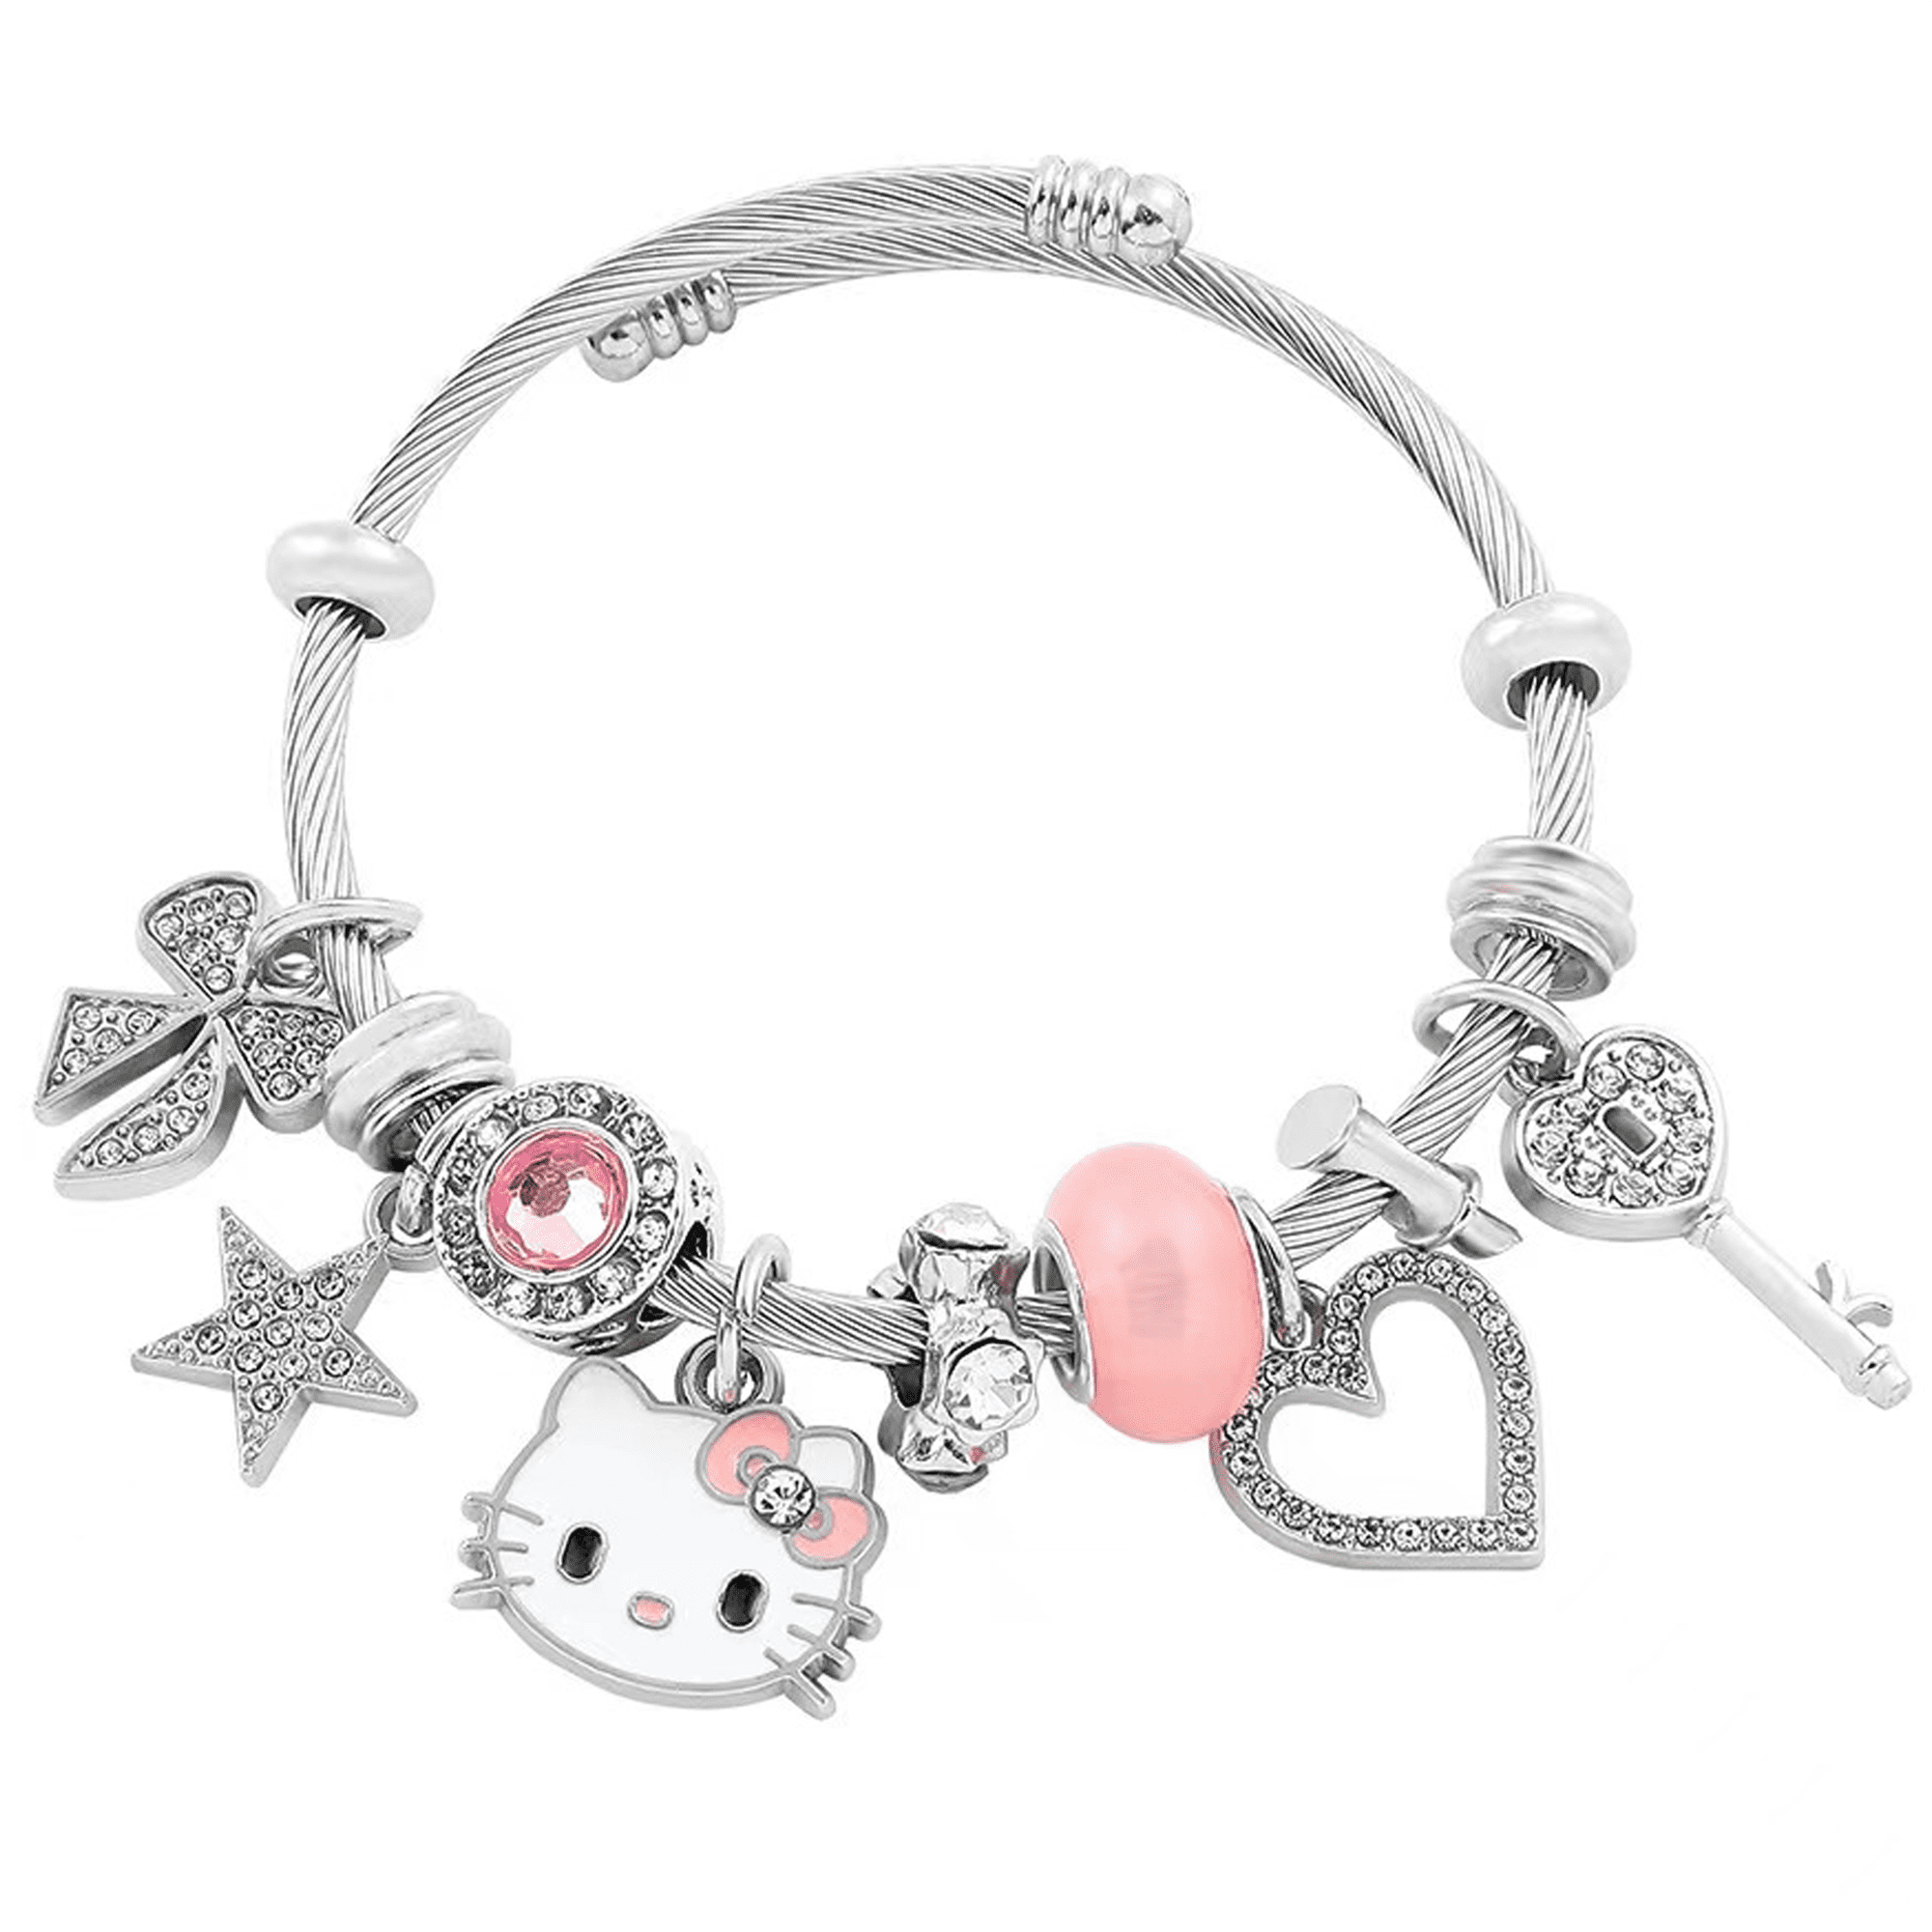 VINCHIC Hello Kitty Bracelet Chain Cuff Jewelry Charms for Bracelets  Fashion Cartoon Accessories for Women Girls Kids Sisters 